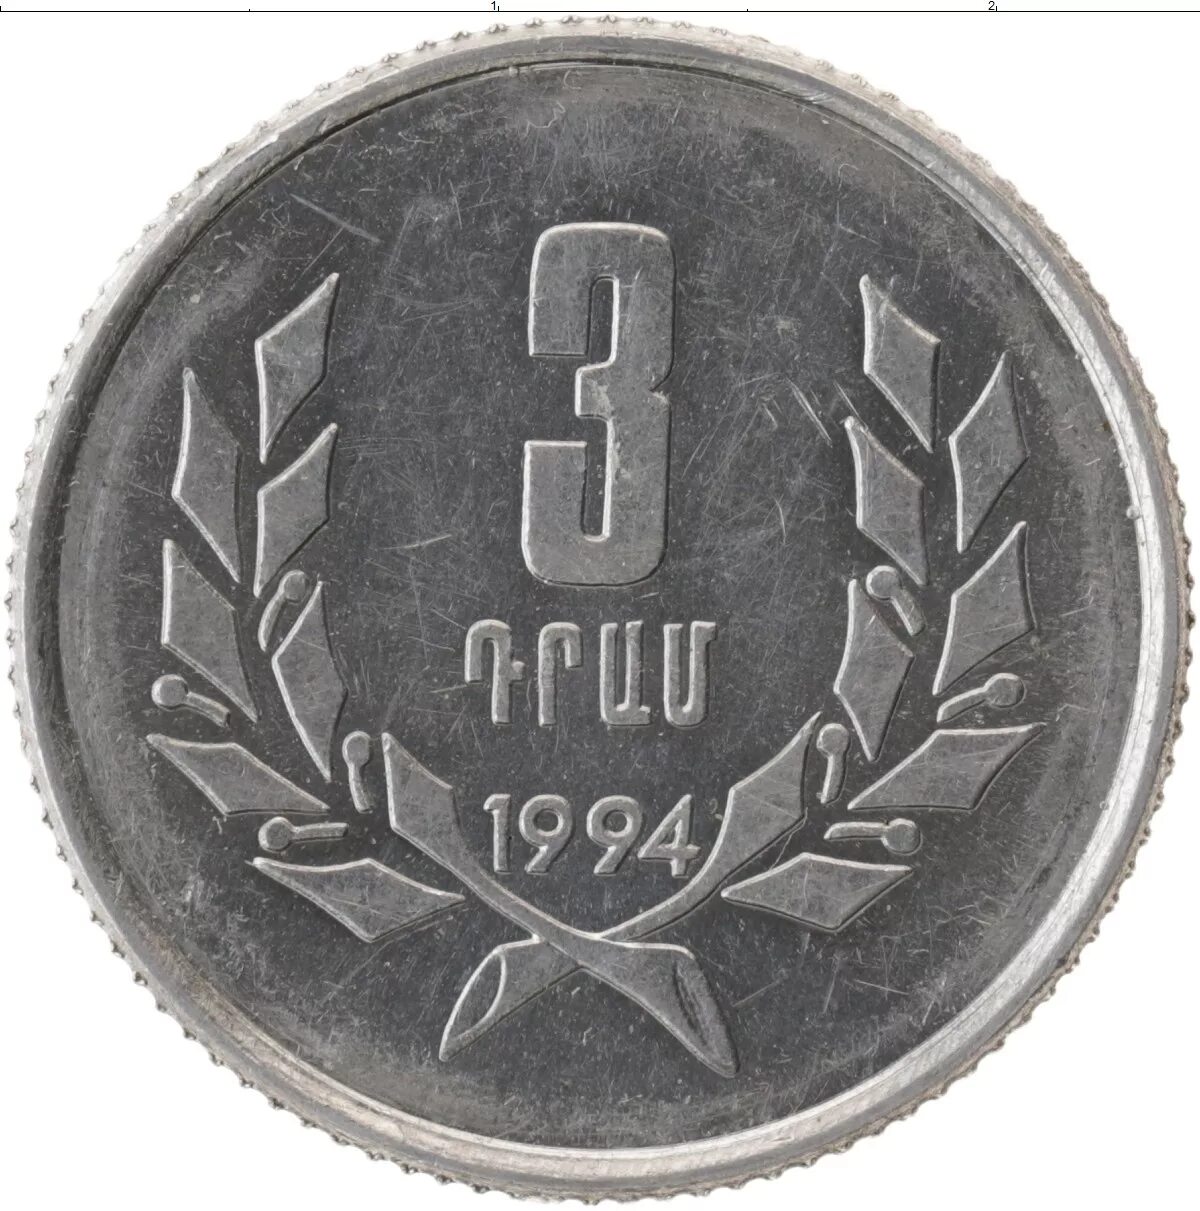 80 рублей 70. 3 Драма 1994 Армения. Монета 3 драма 1994 Армения. Монеты Армении 1994. Армянские монеты 1994 года.